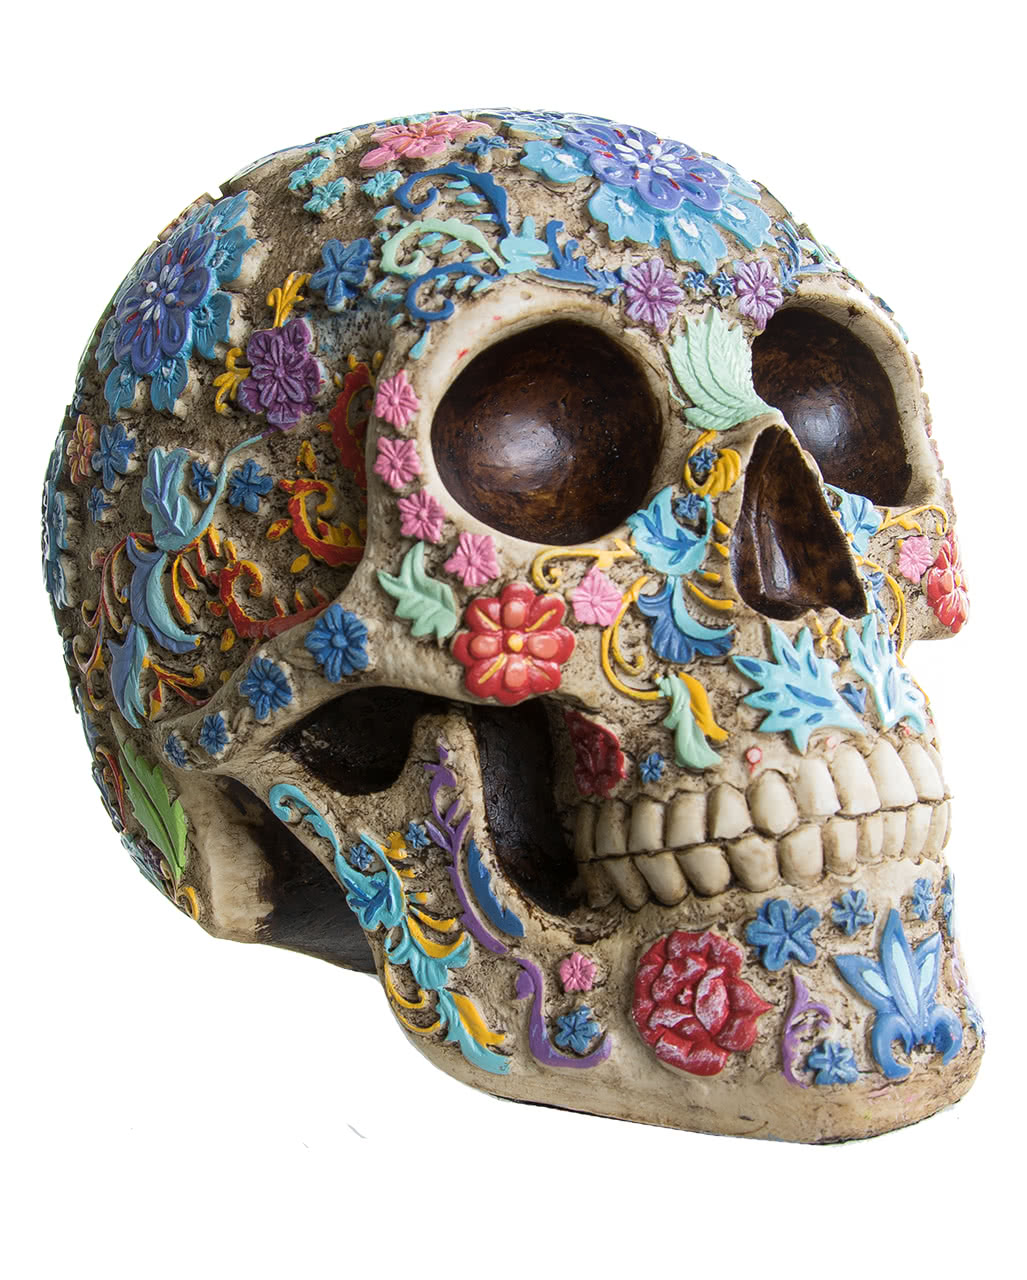  Skull  and crossbones painted Halloween  decorations  